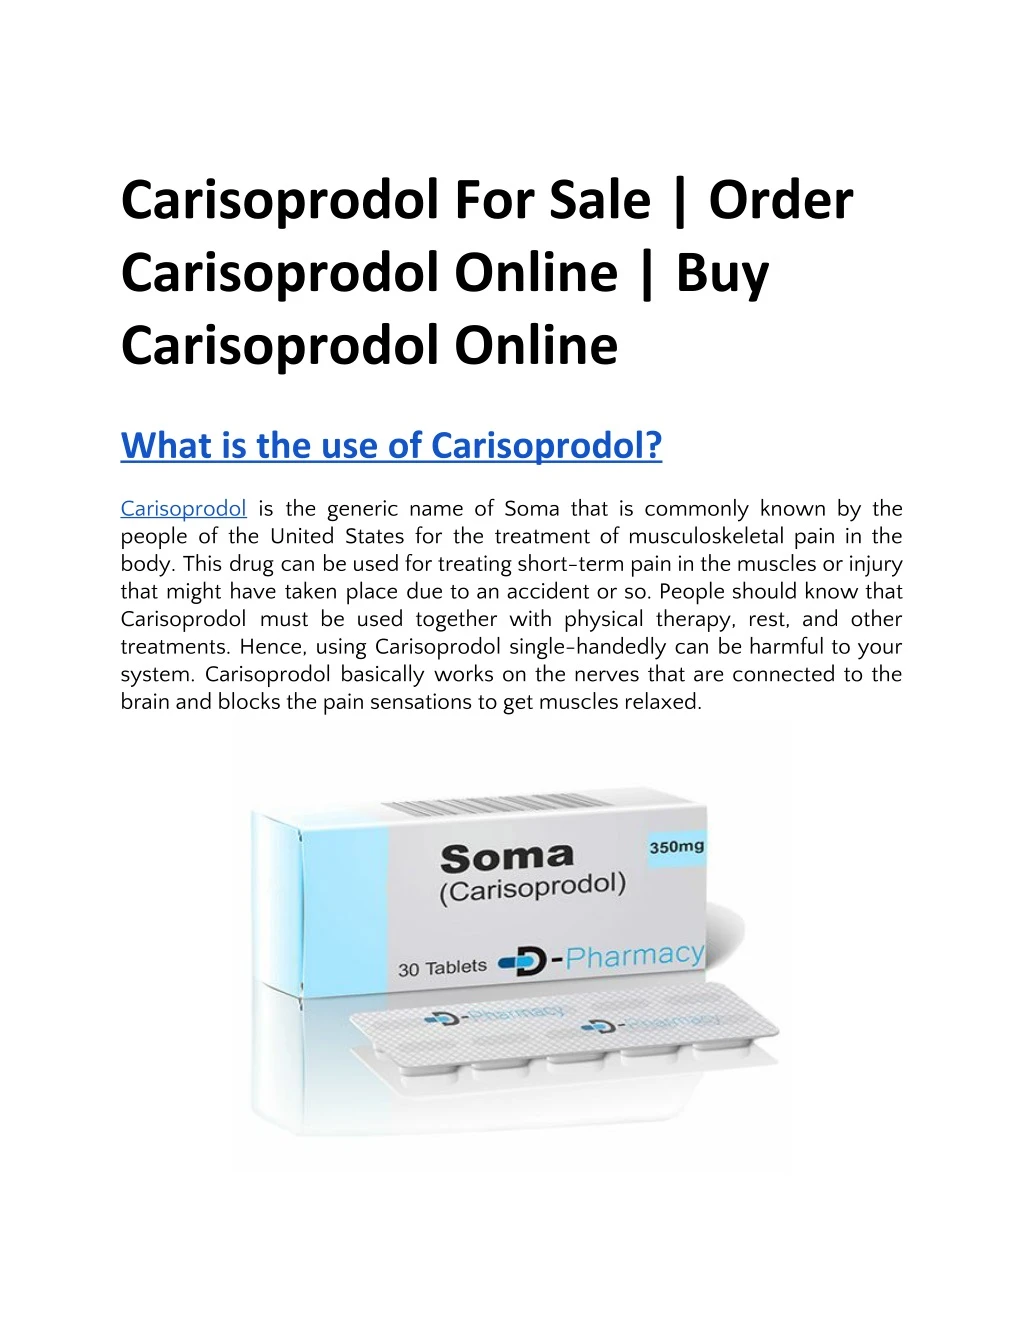 carisoprodol for sale order carisoprodol online